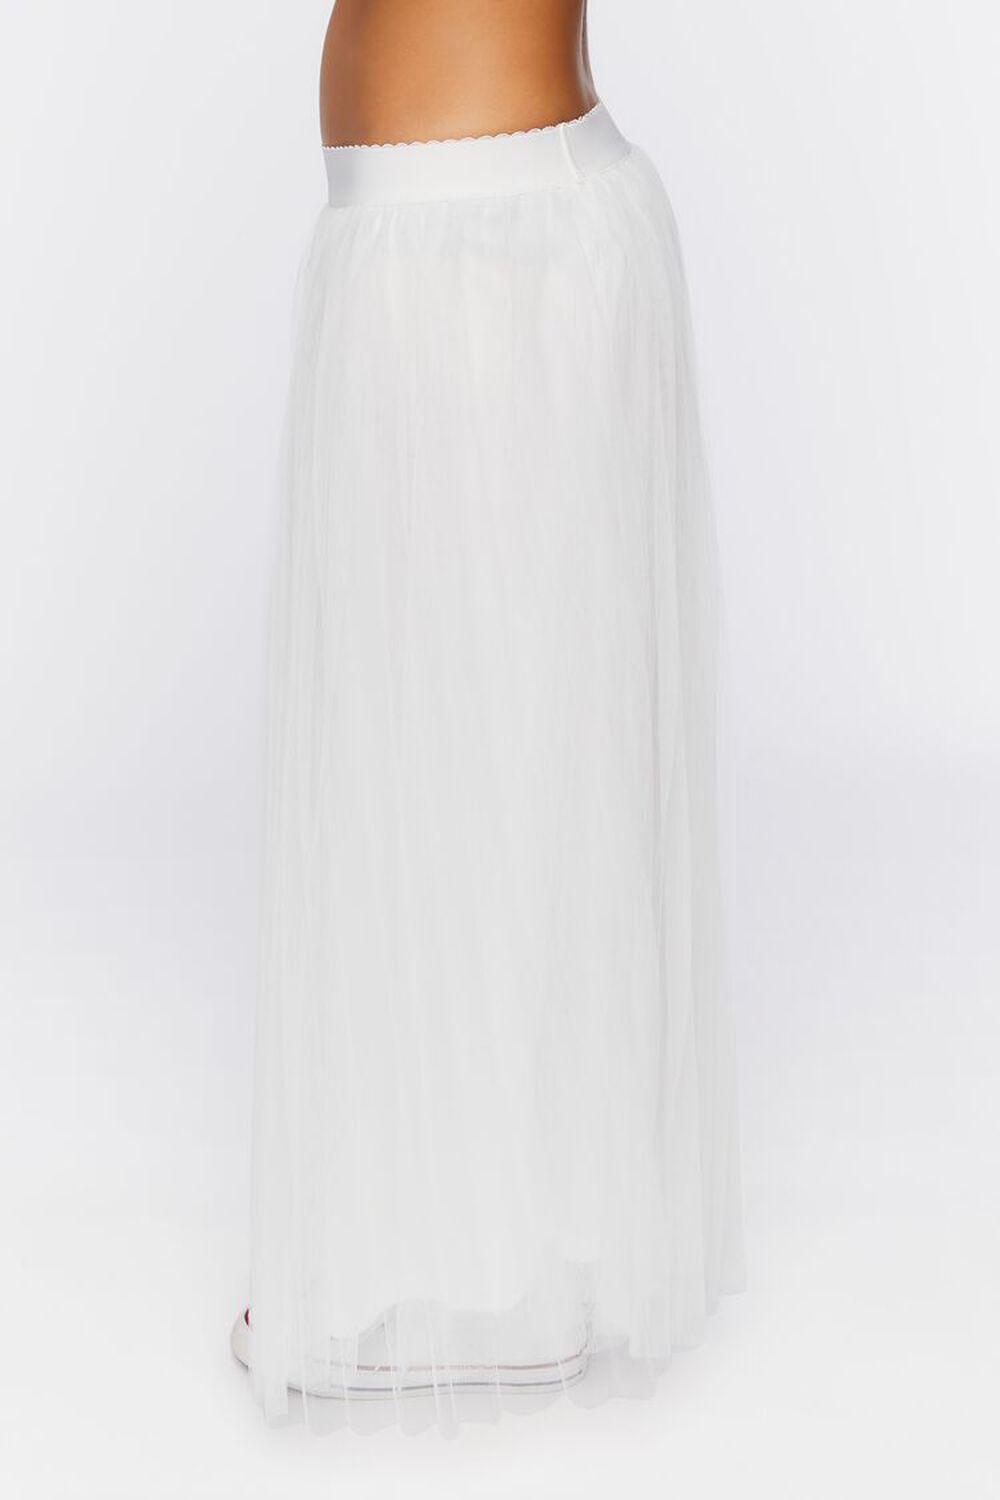 WHITE Tulle Maxi Skirt, image 3